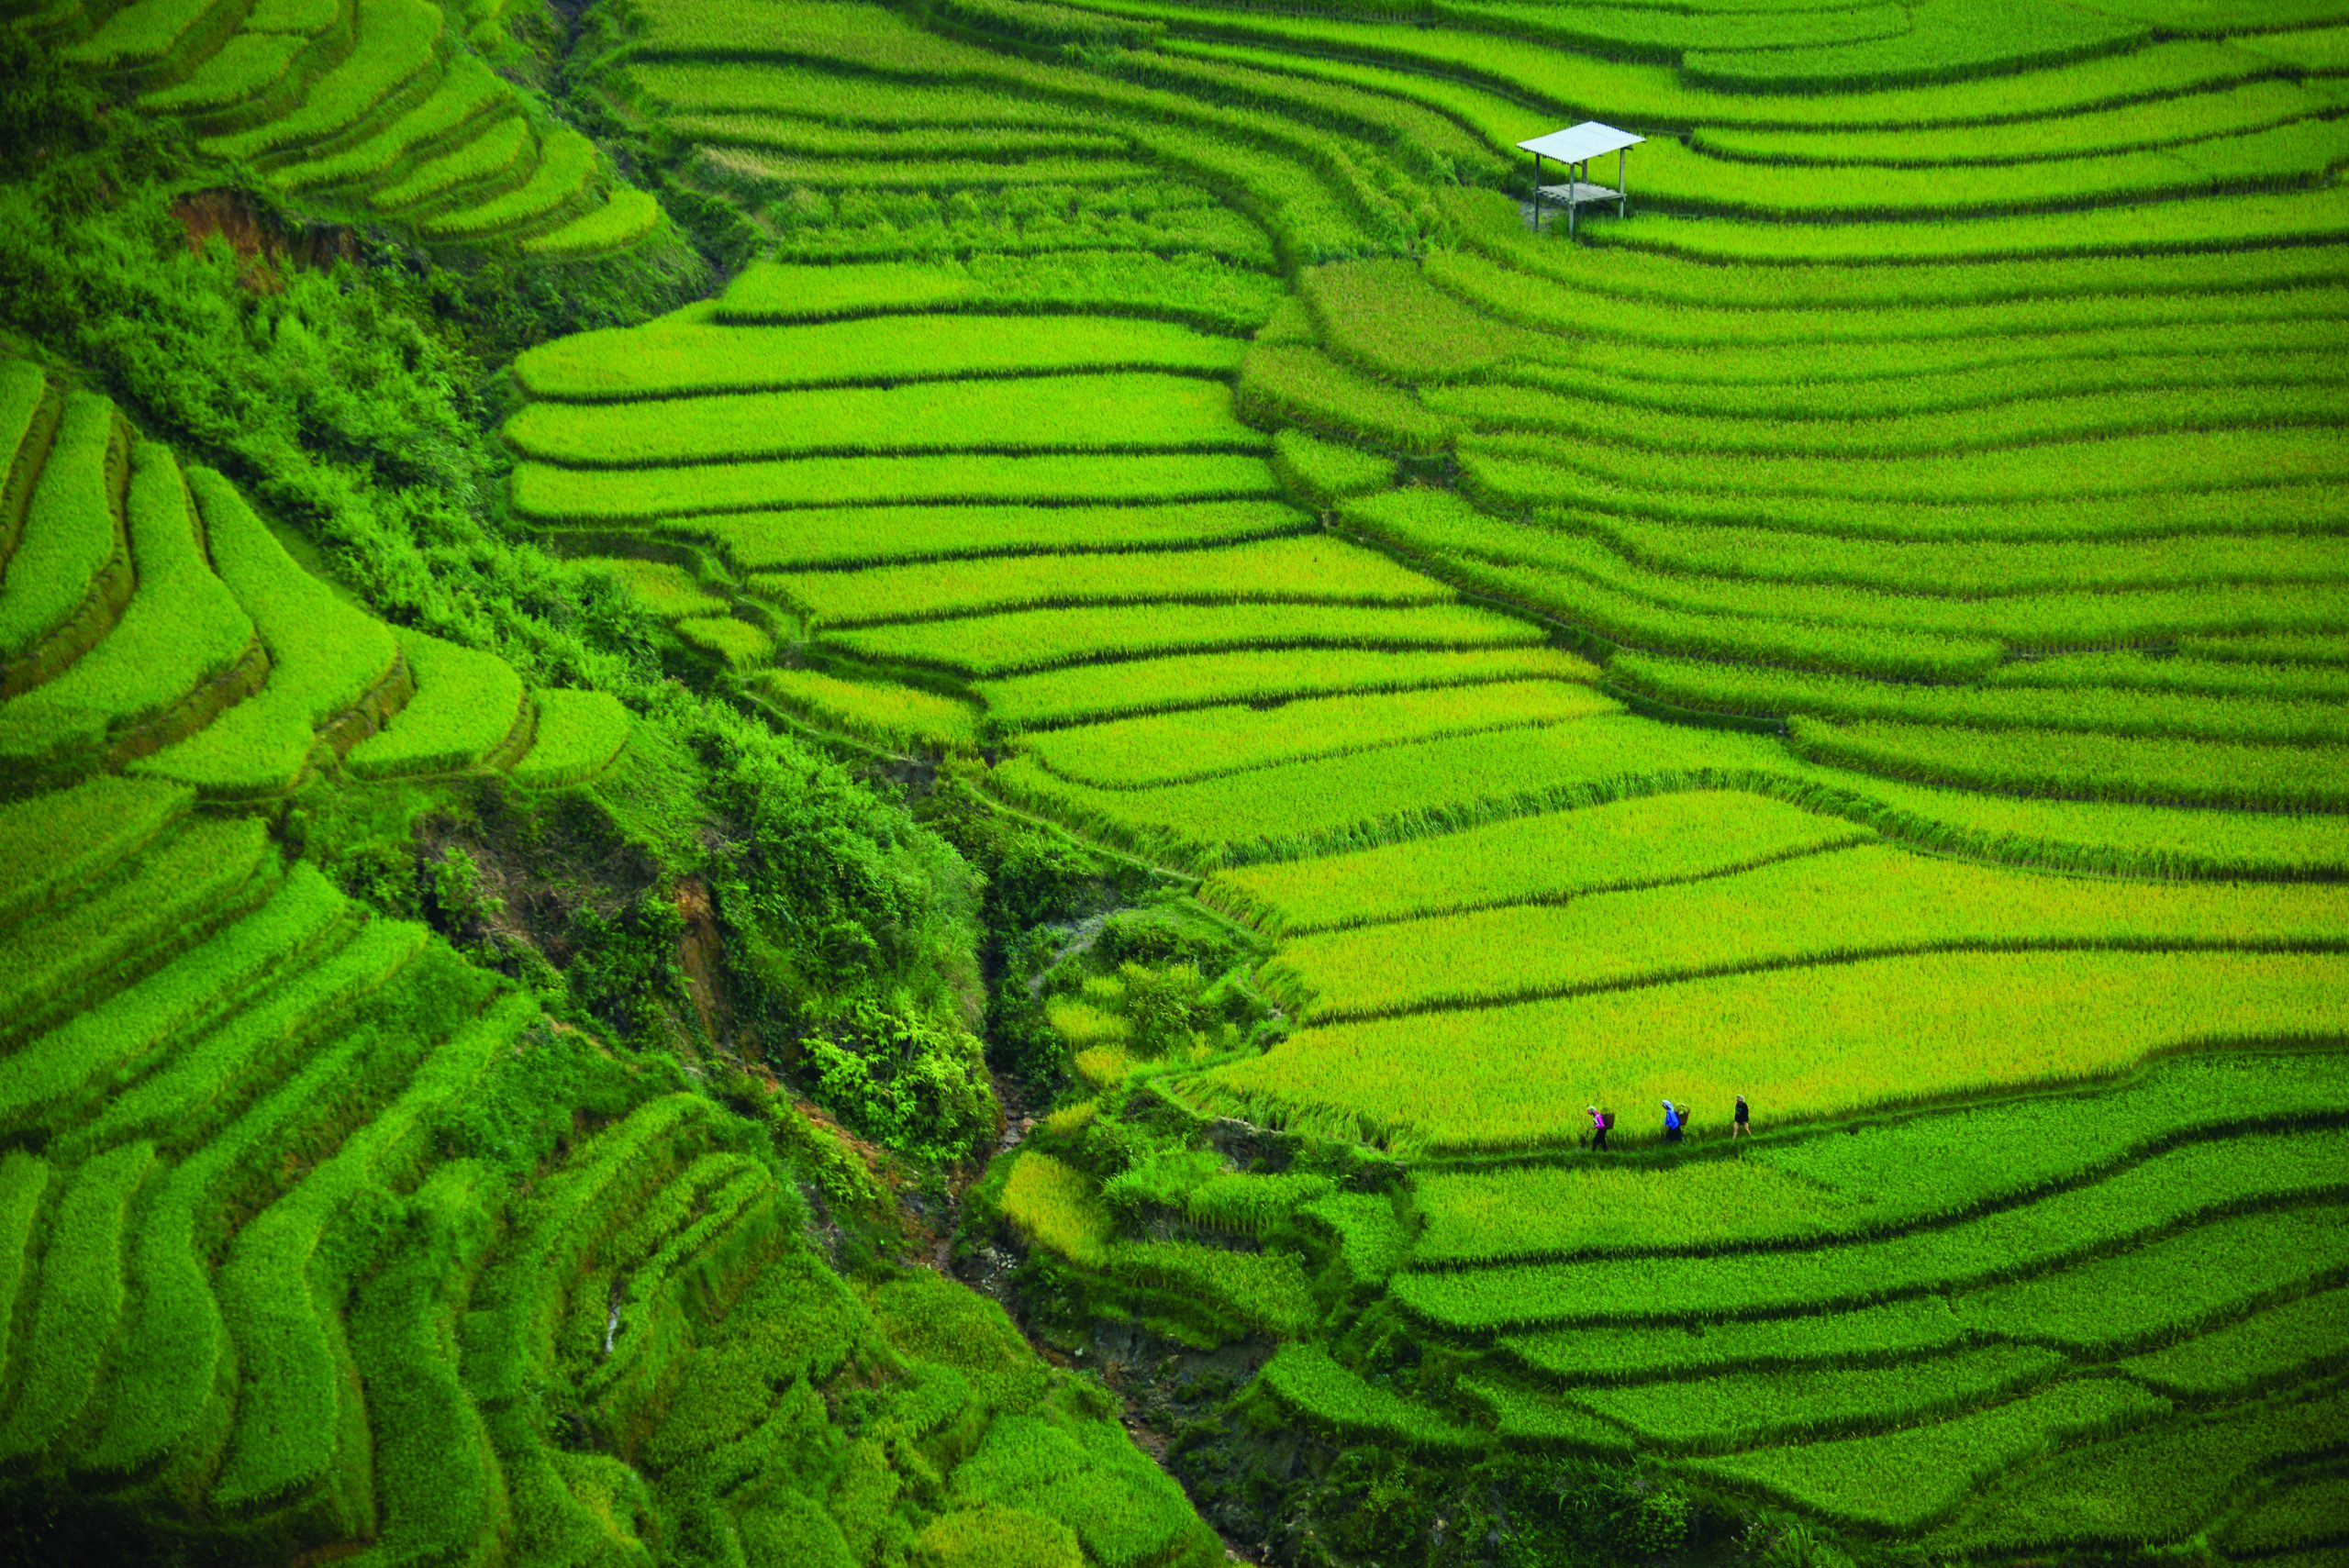 image of rice fields in highlands Vietnam